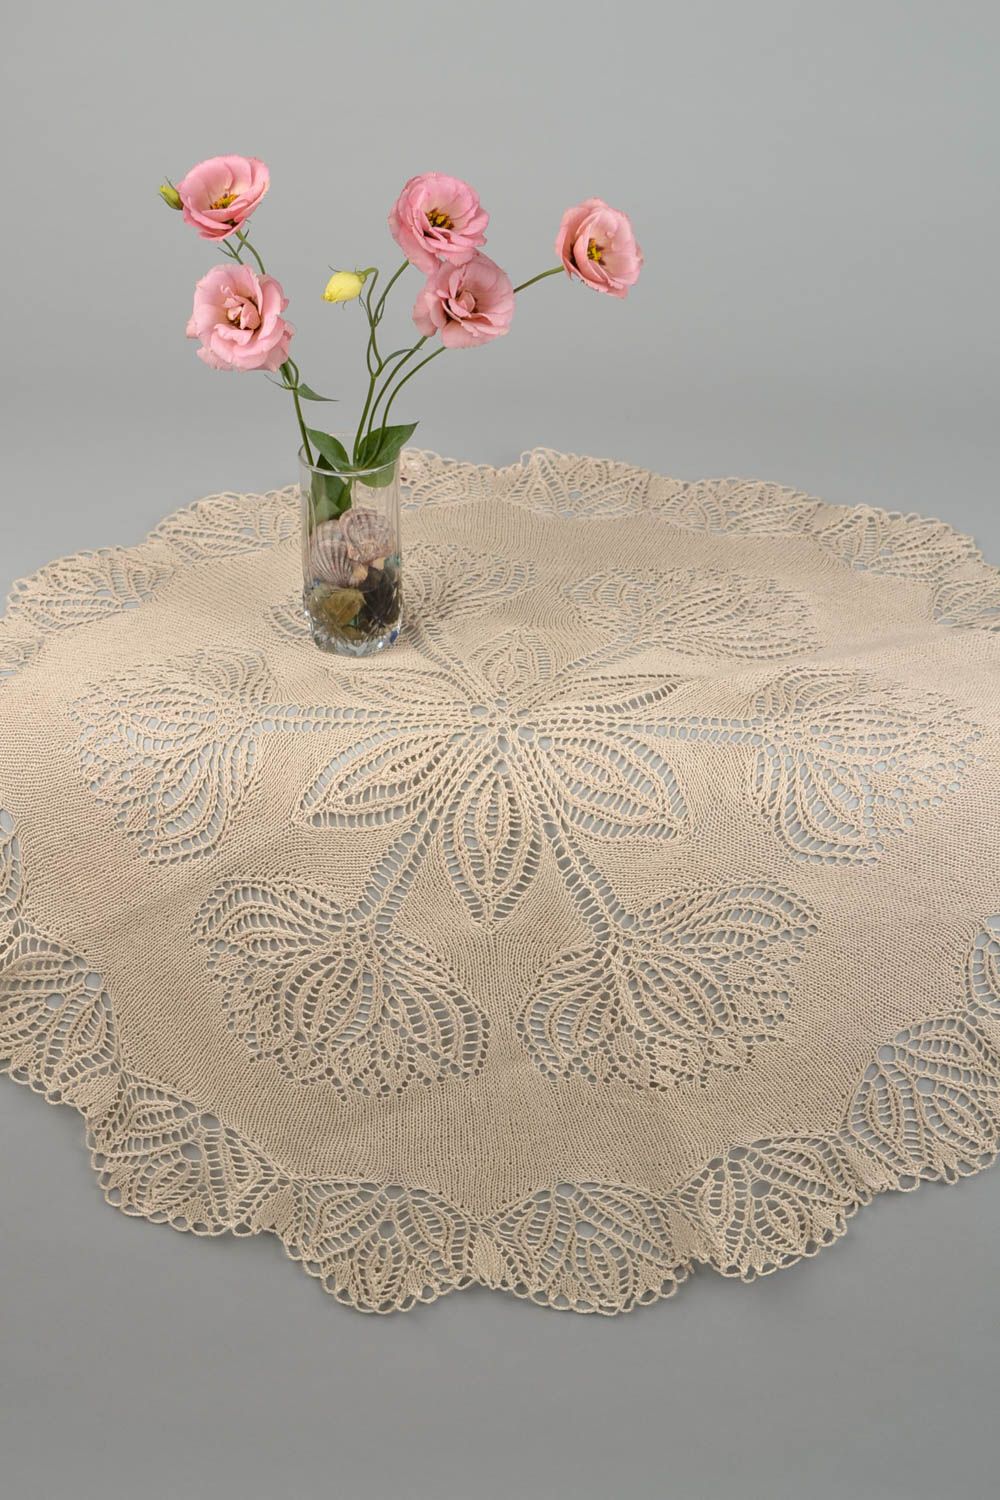 Handmade crochet napkin interior napkin for table home textiles decor ideas photo 1